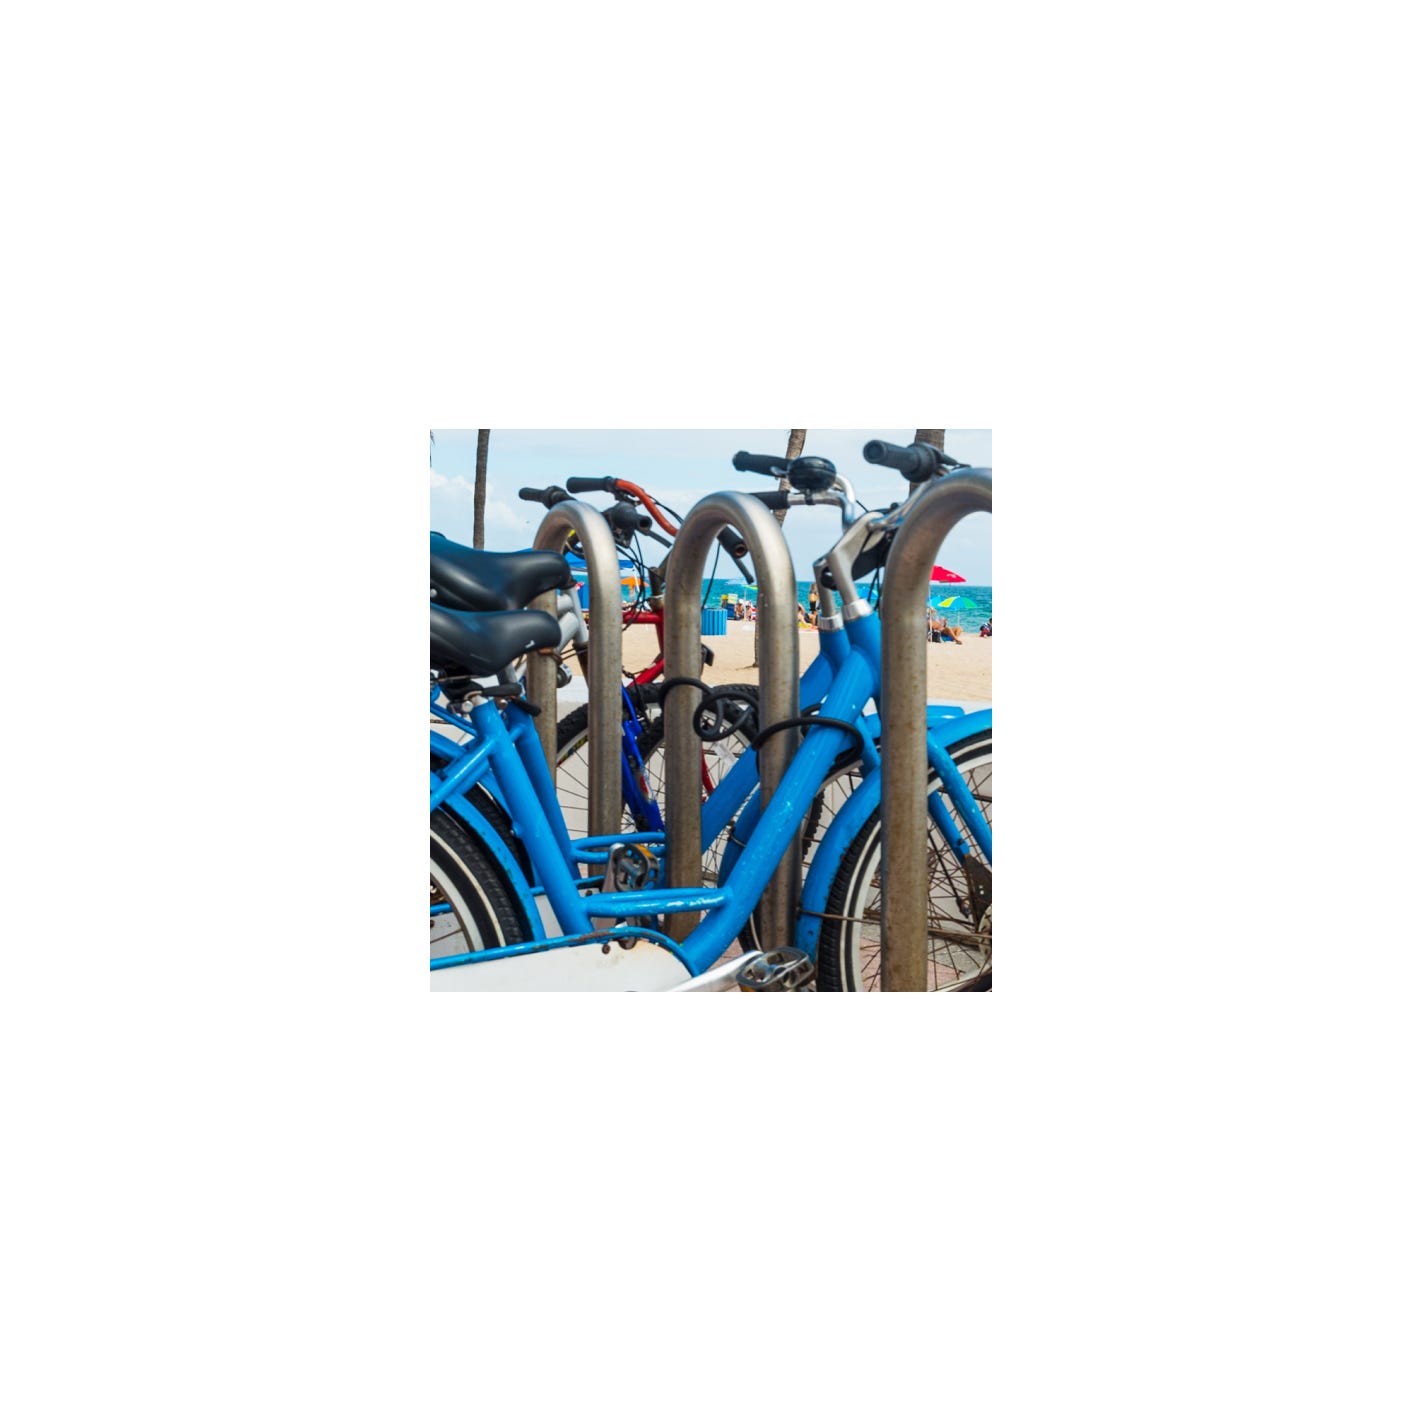 THIRARD - Câble antivol Twisty, vélo, abris de jardin, câble acier 1.80m 3